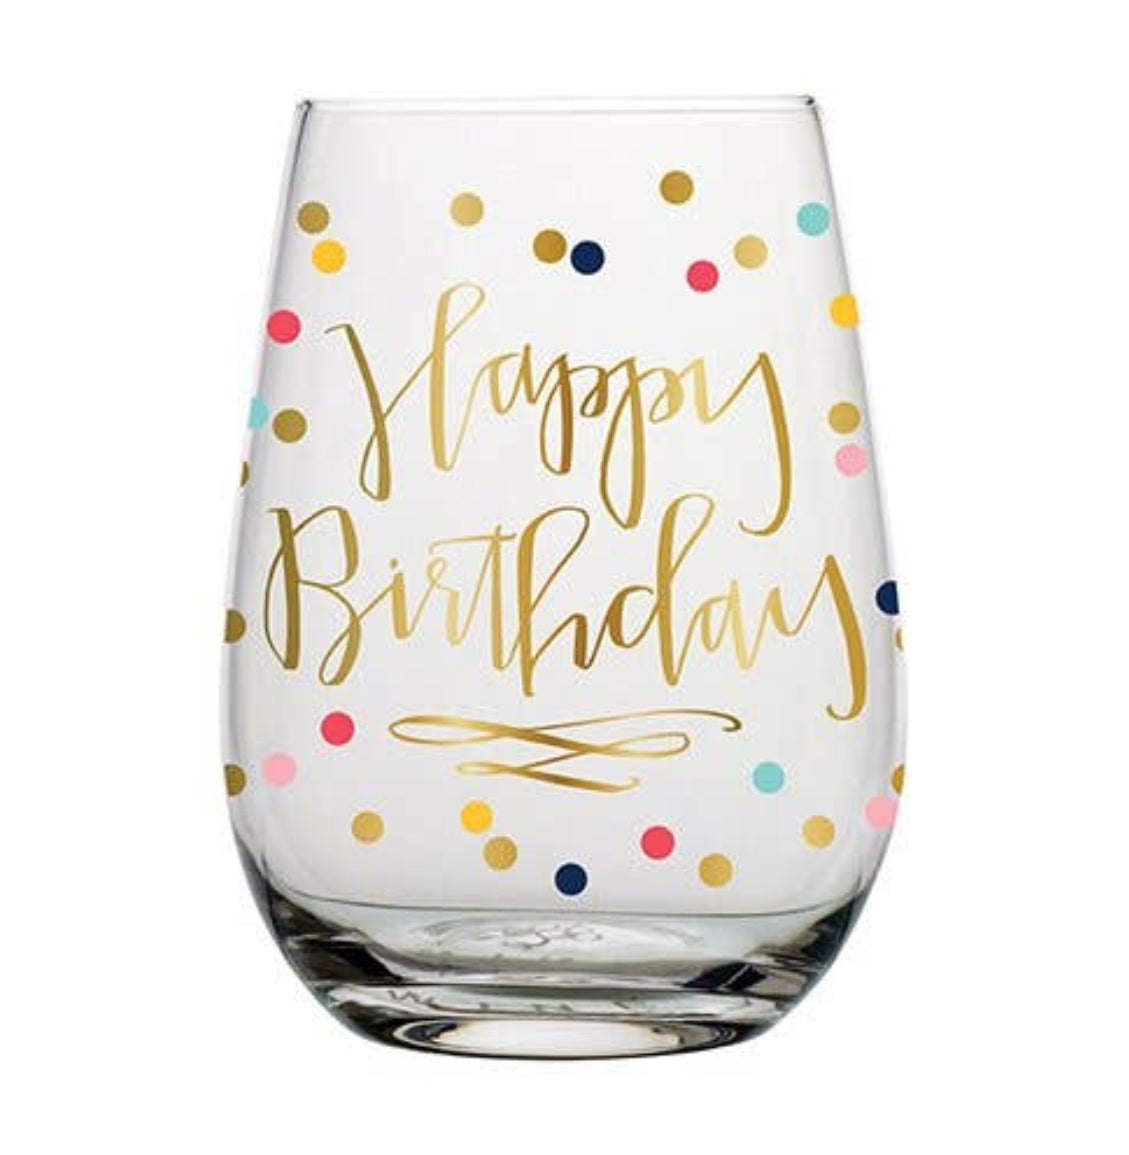 Happy birthday wine glass - LURE Boutique